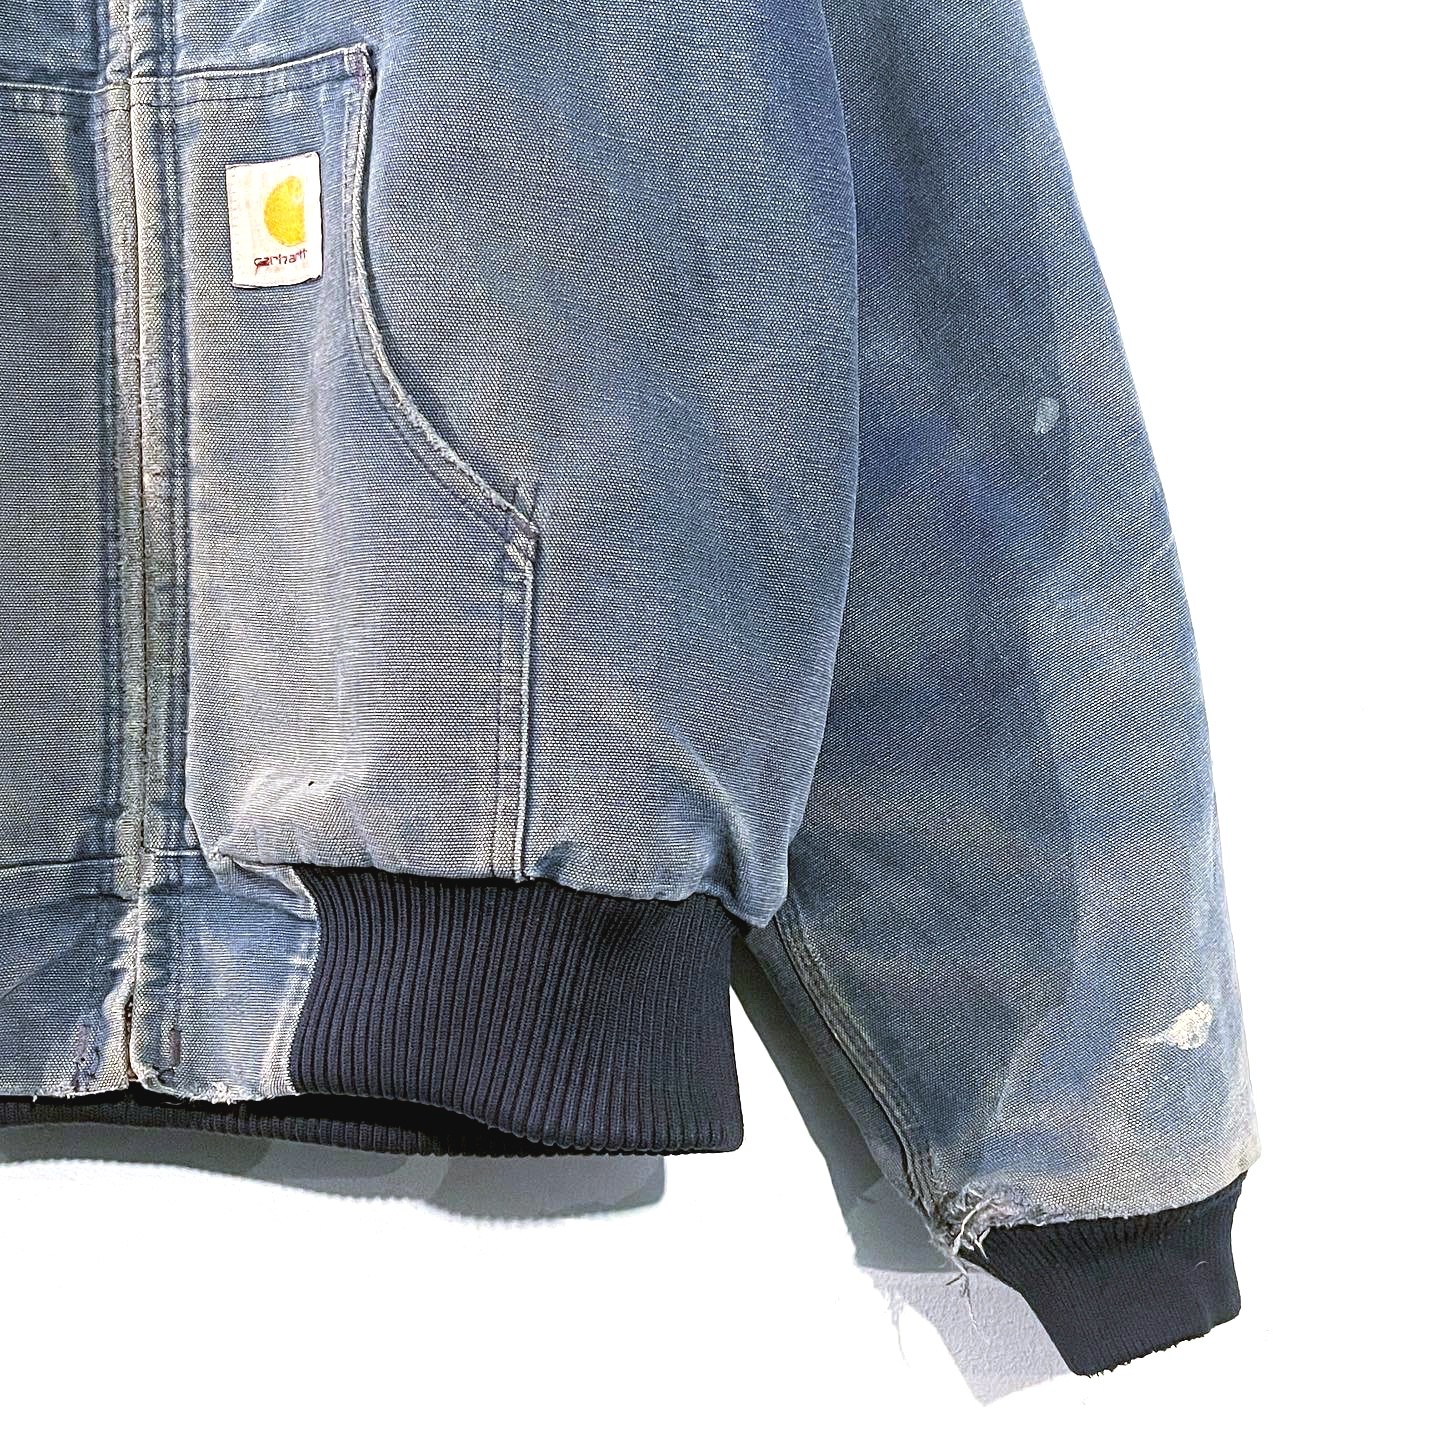 1990's Carhartt active jacket